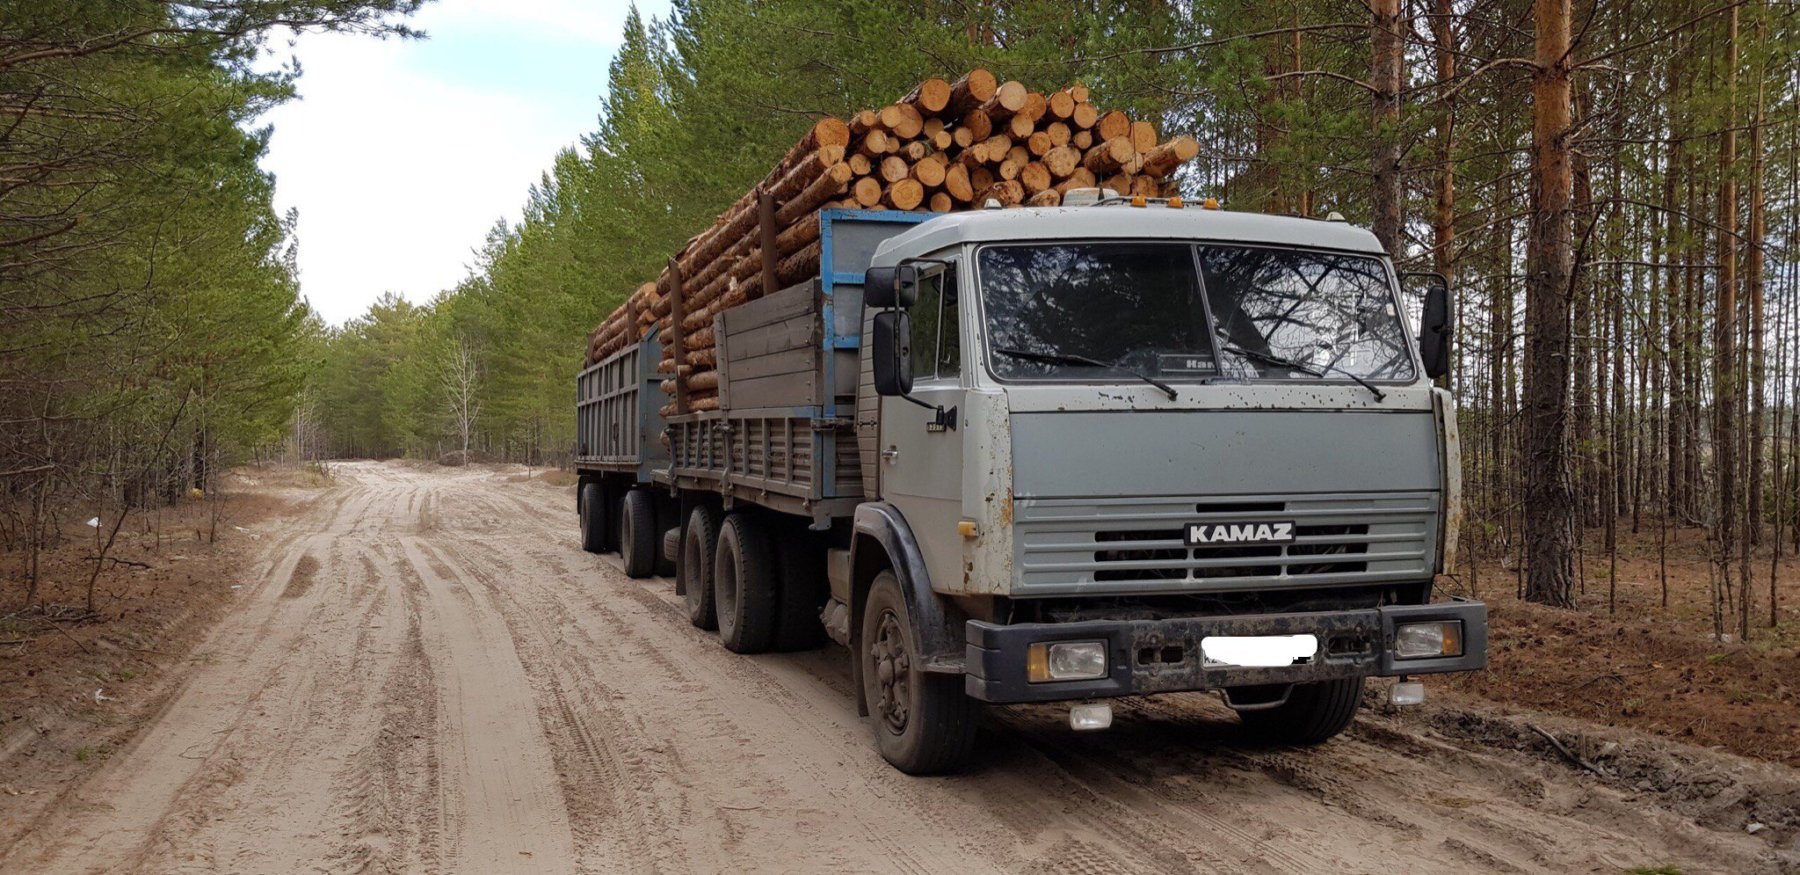 КАМАЗ 5320 груженый лесом